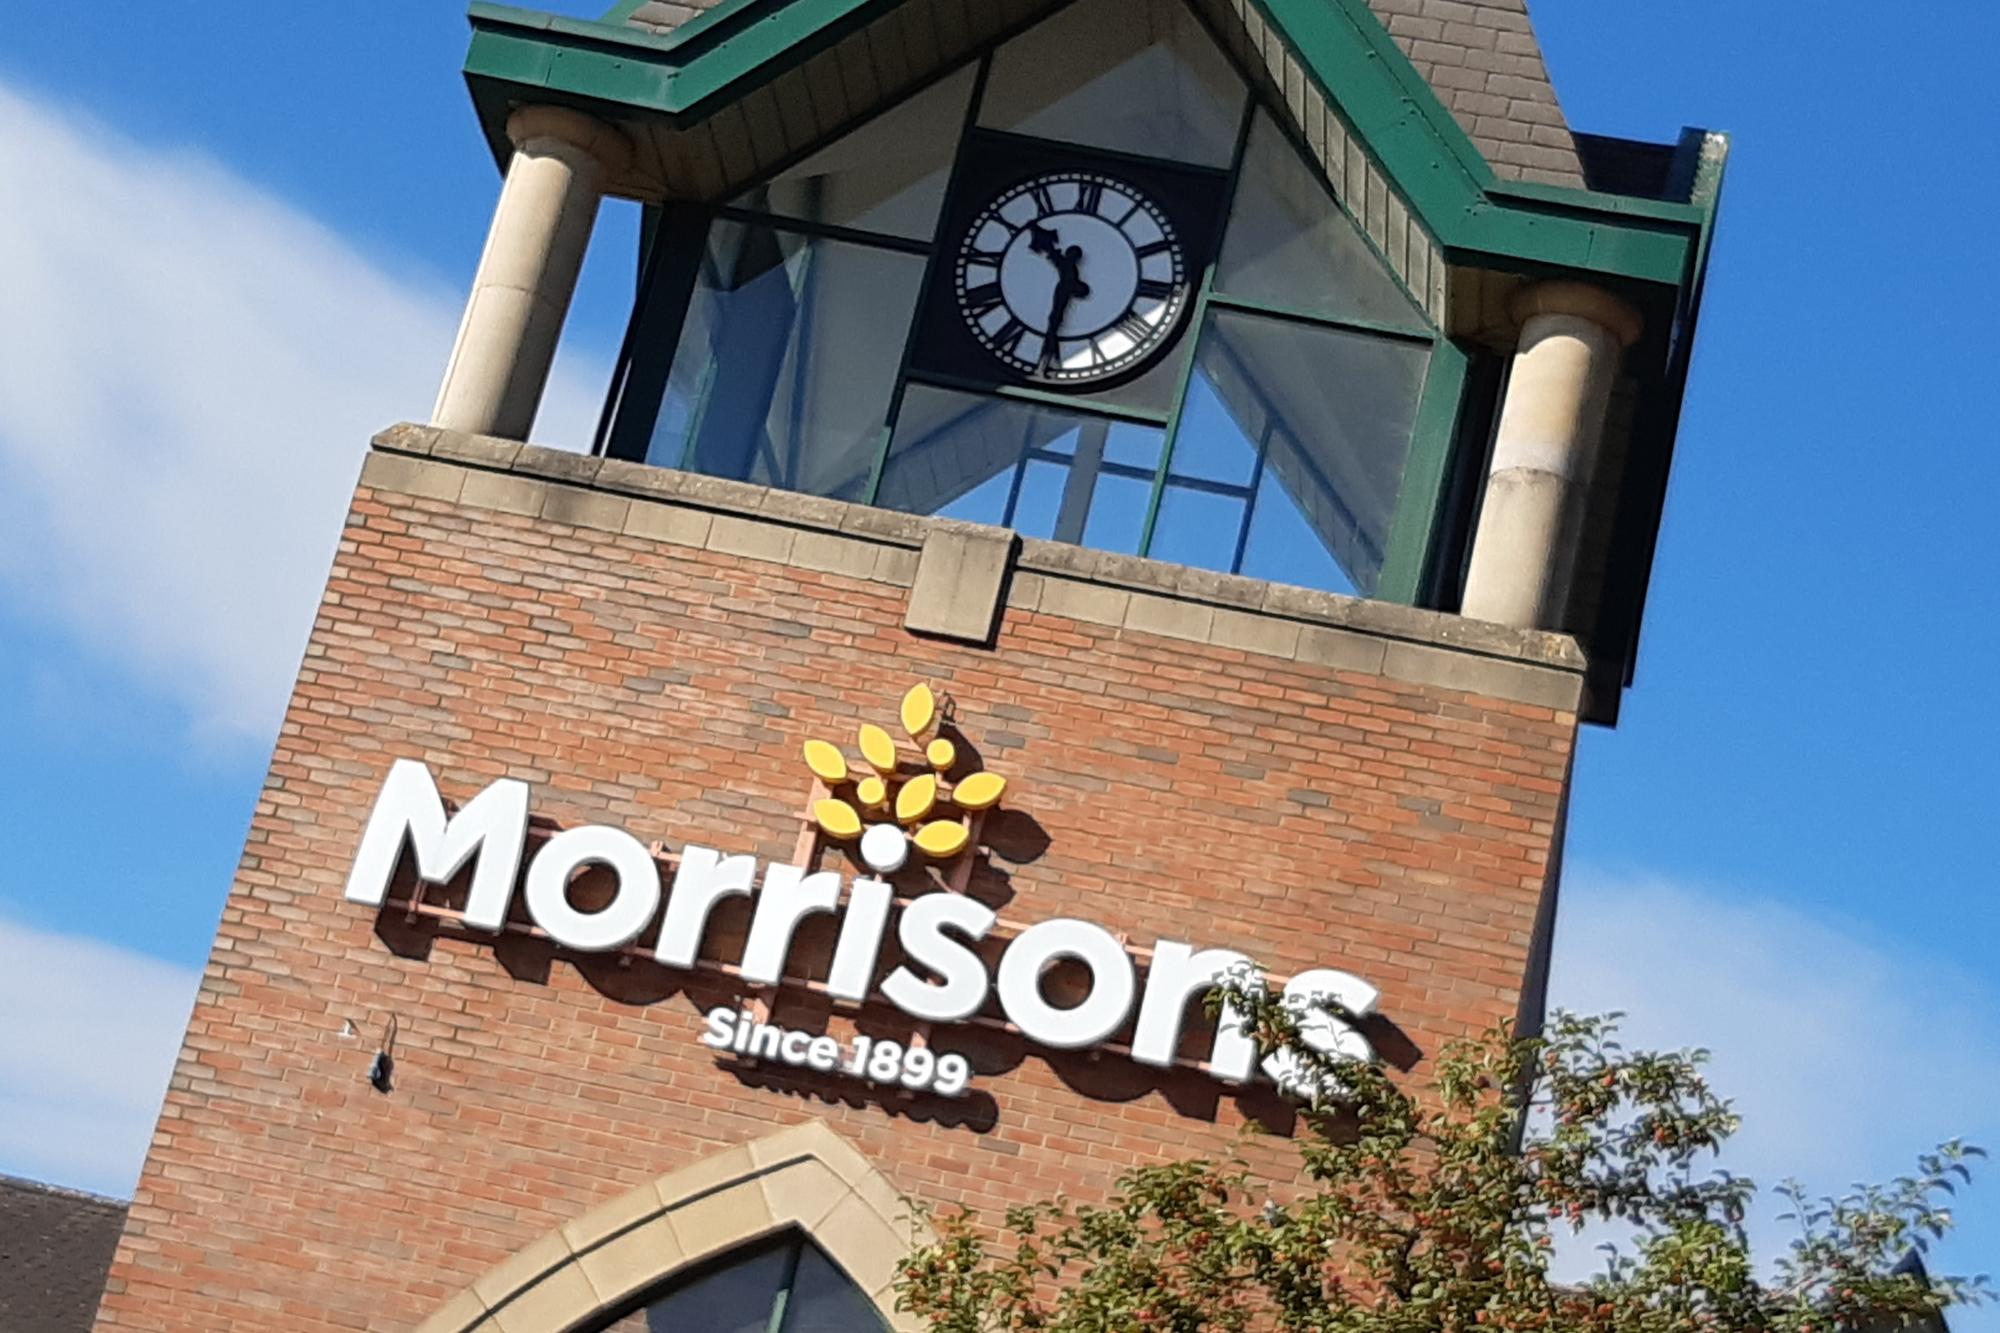 Morrisons BBQ meat special offer: Supermarket store brings back 20-pack meat deal for £9.99